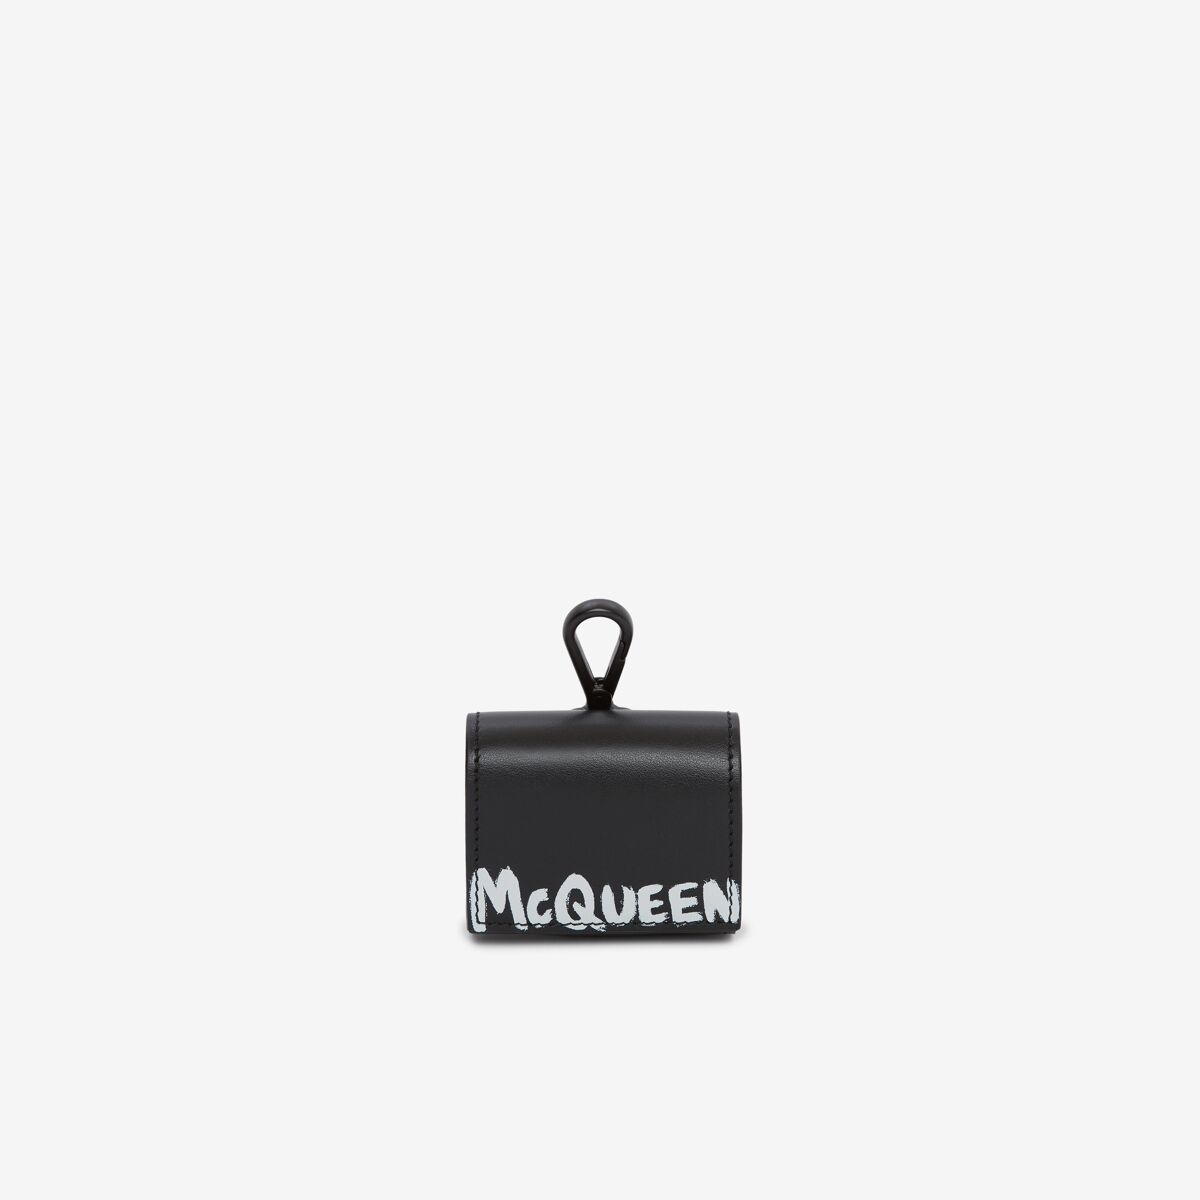 ALEXANDER MCQUEEN McQueen Graffiti AirPod Pro Case